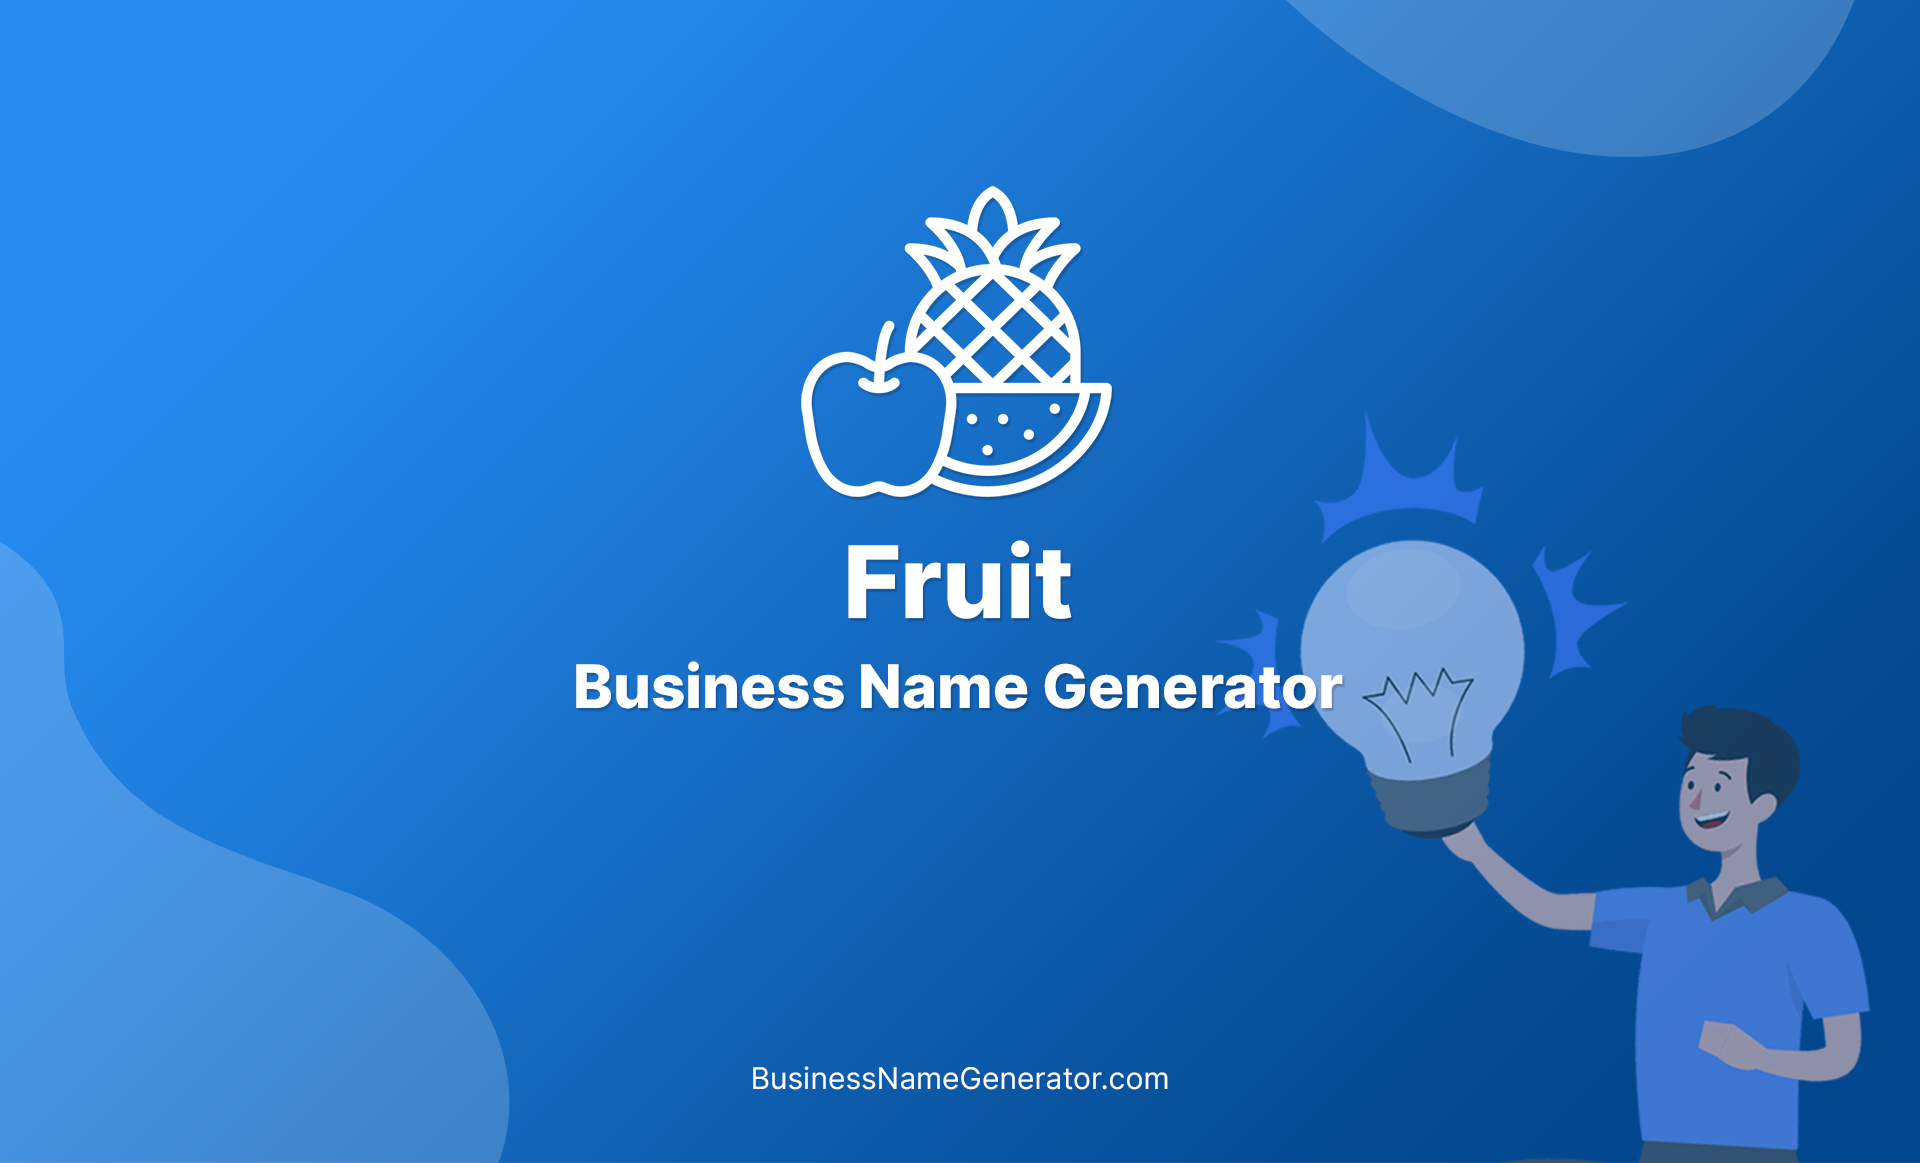 Fruit Business Name Generator